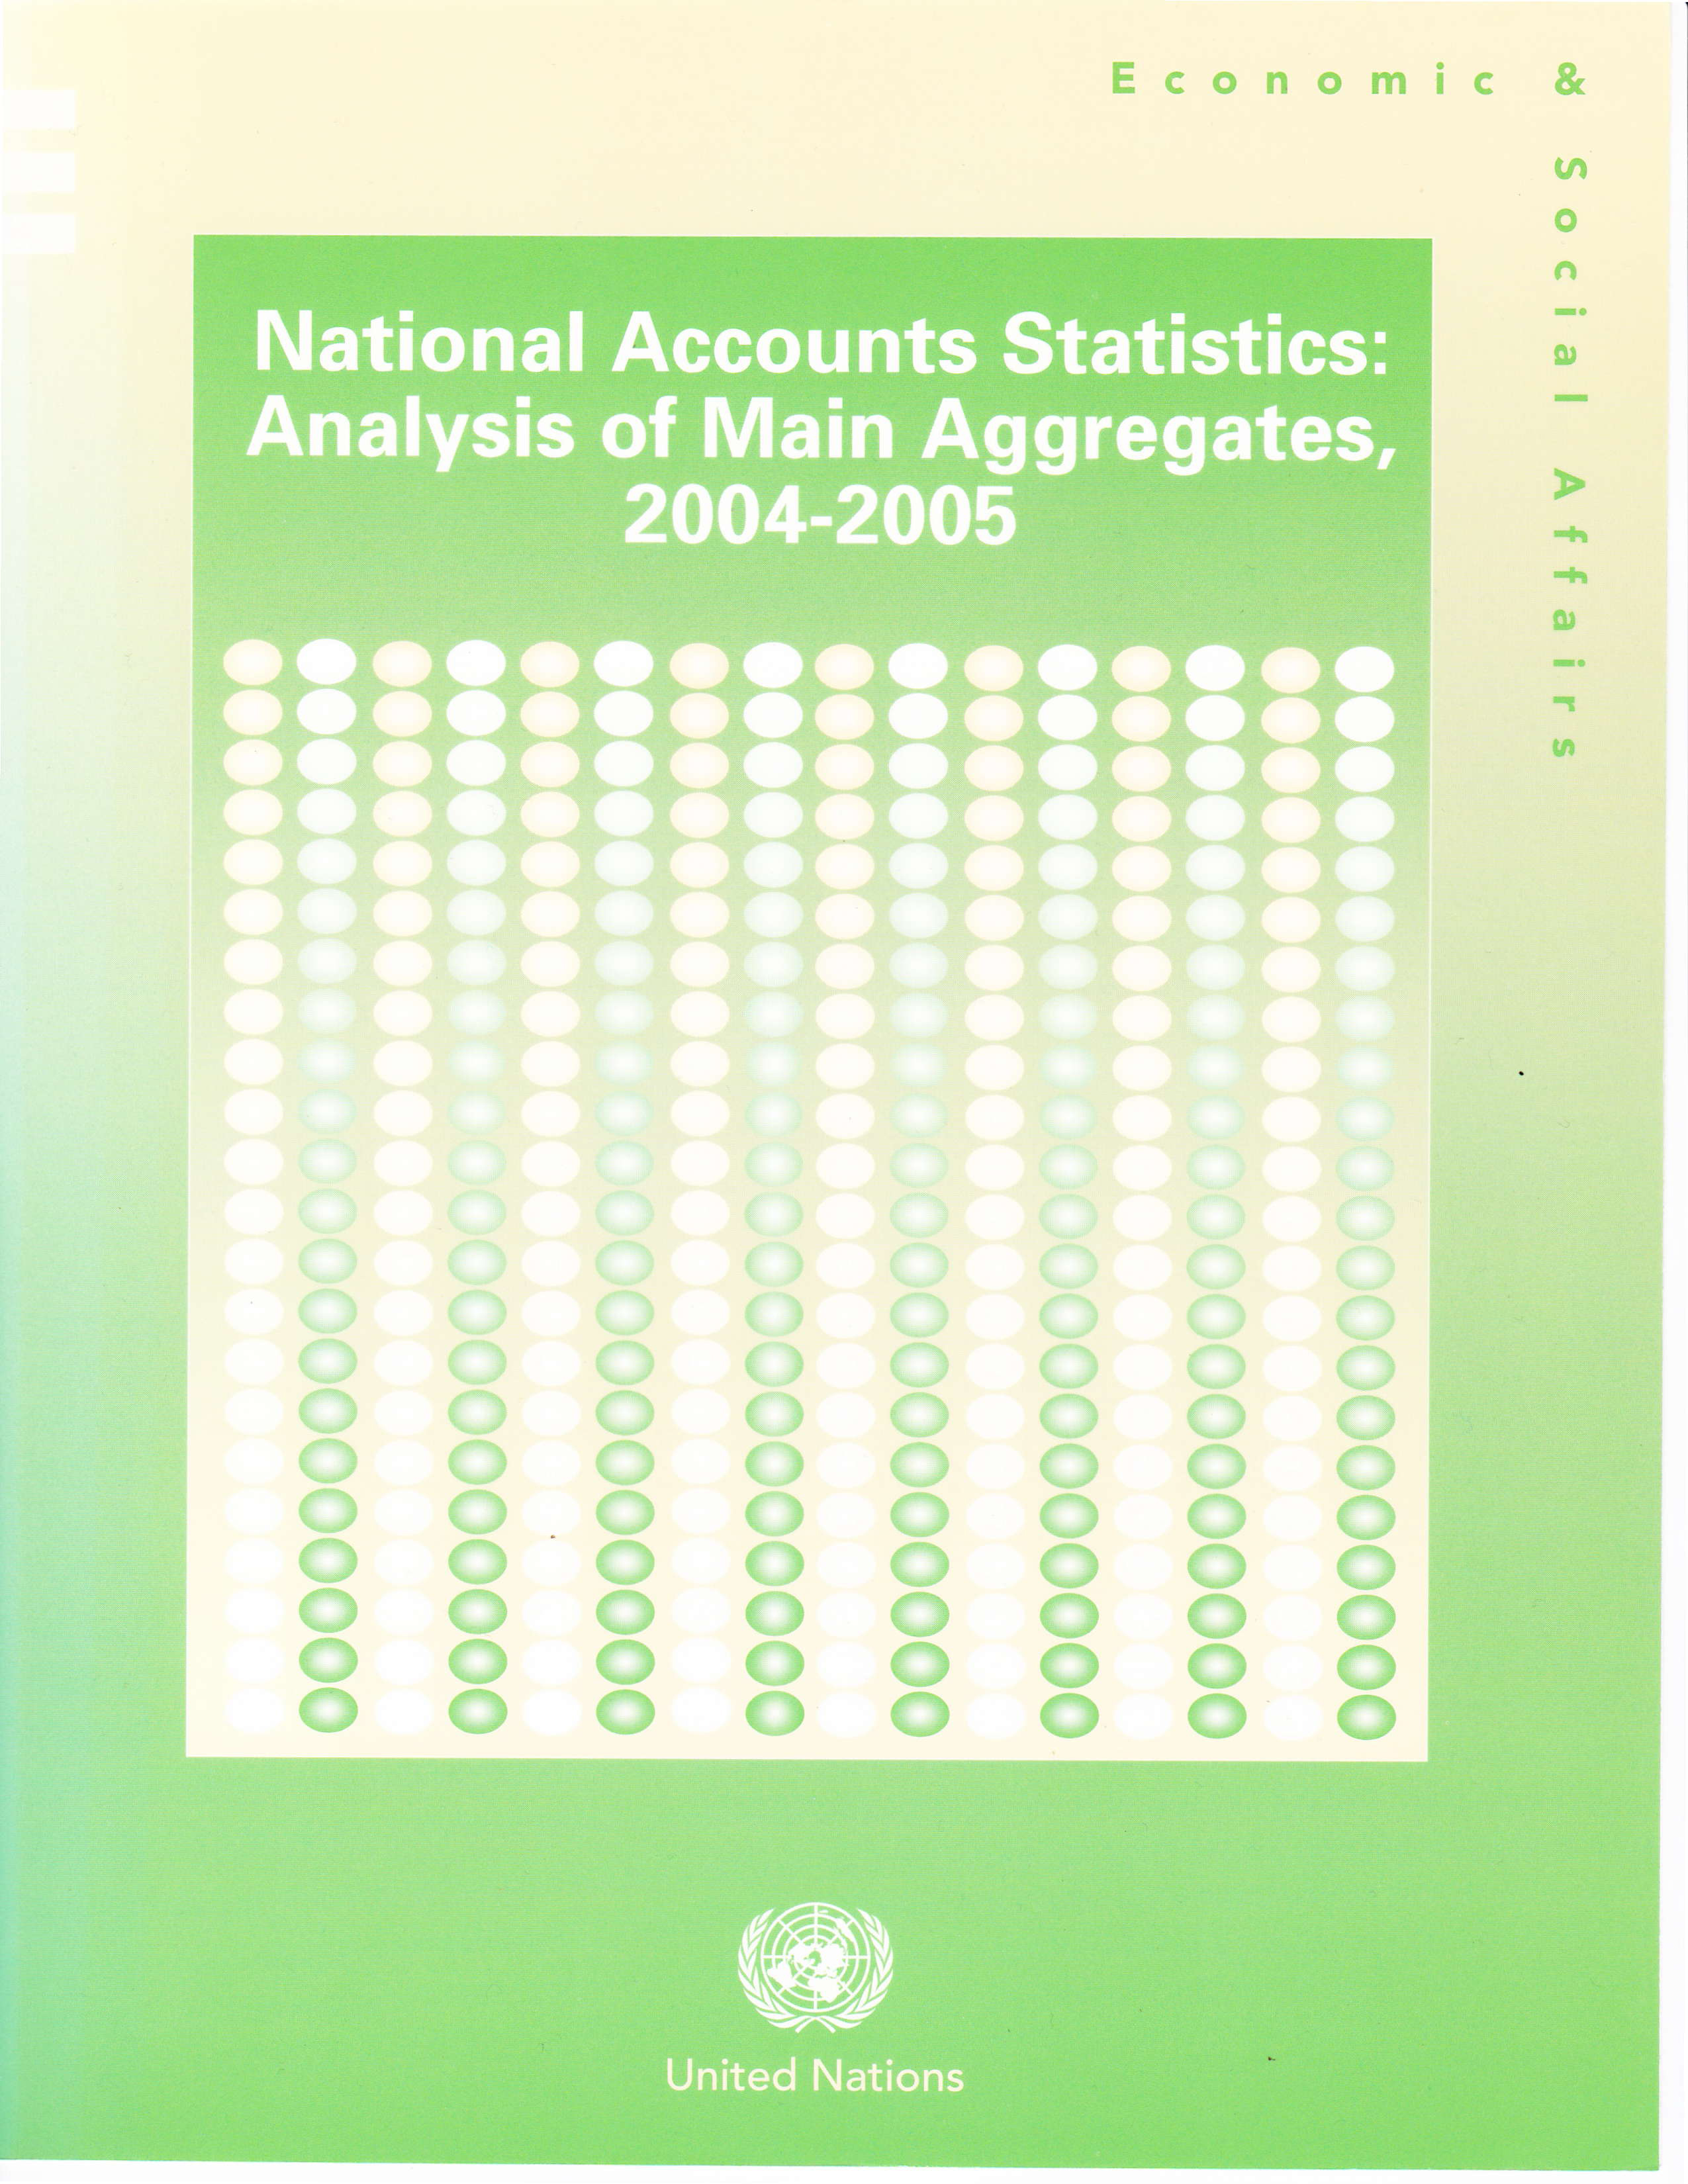 image of National Accounts Statistics: Analysis of Main Aggregates 2004-2005